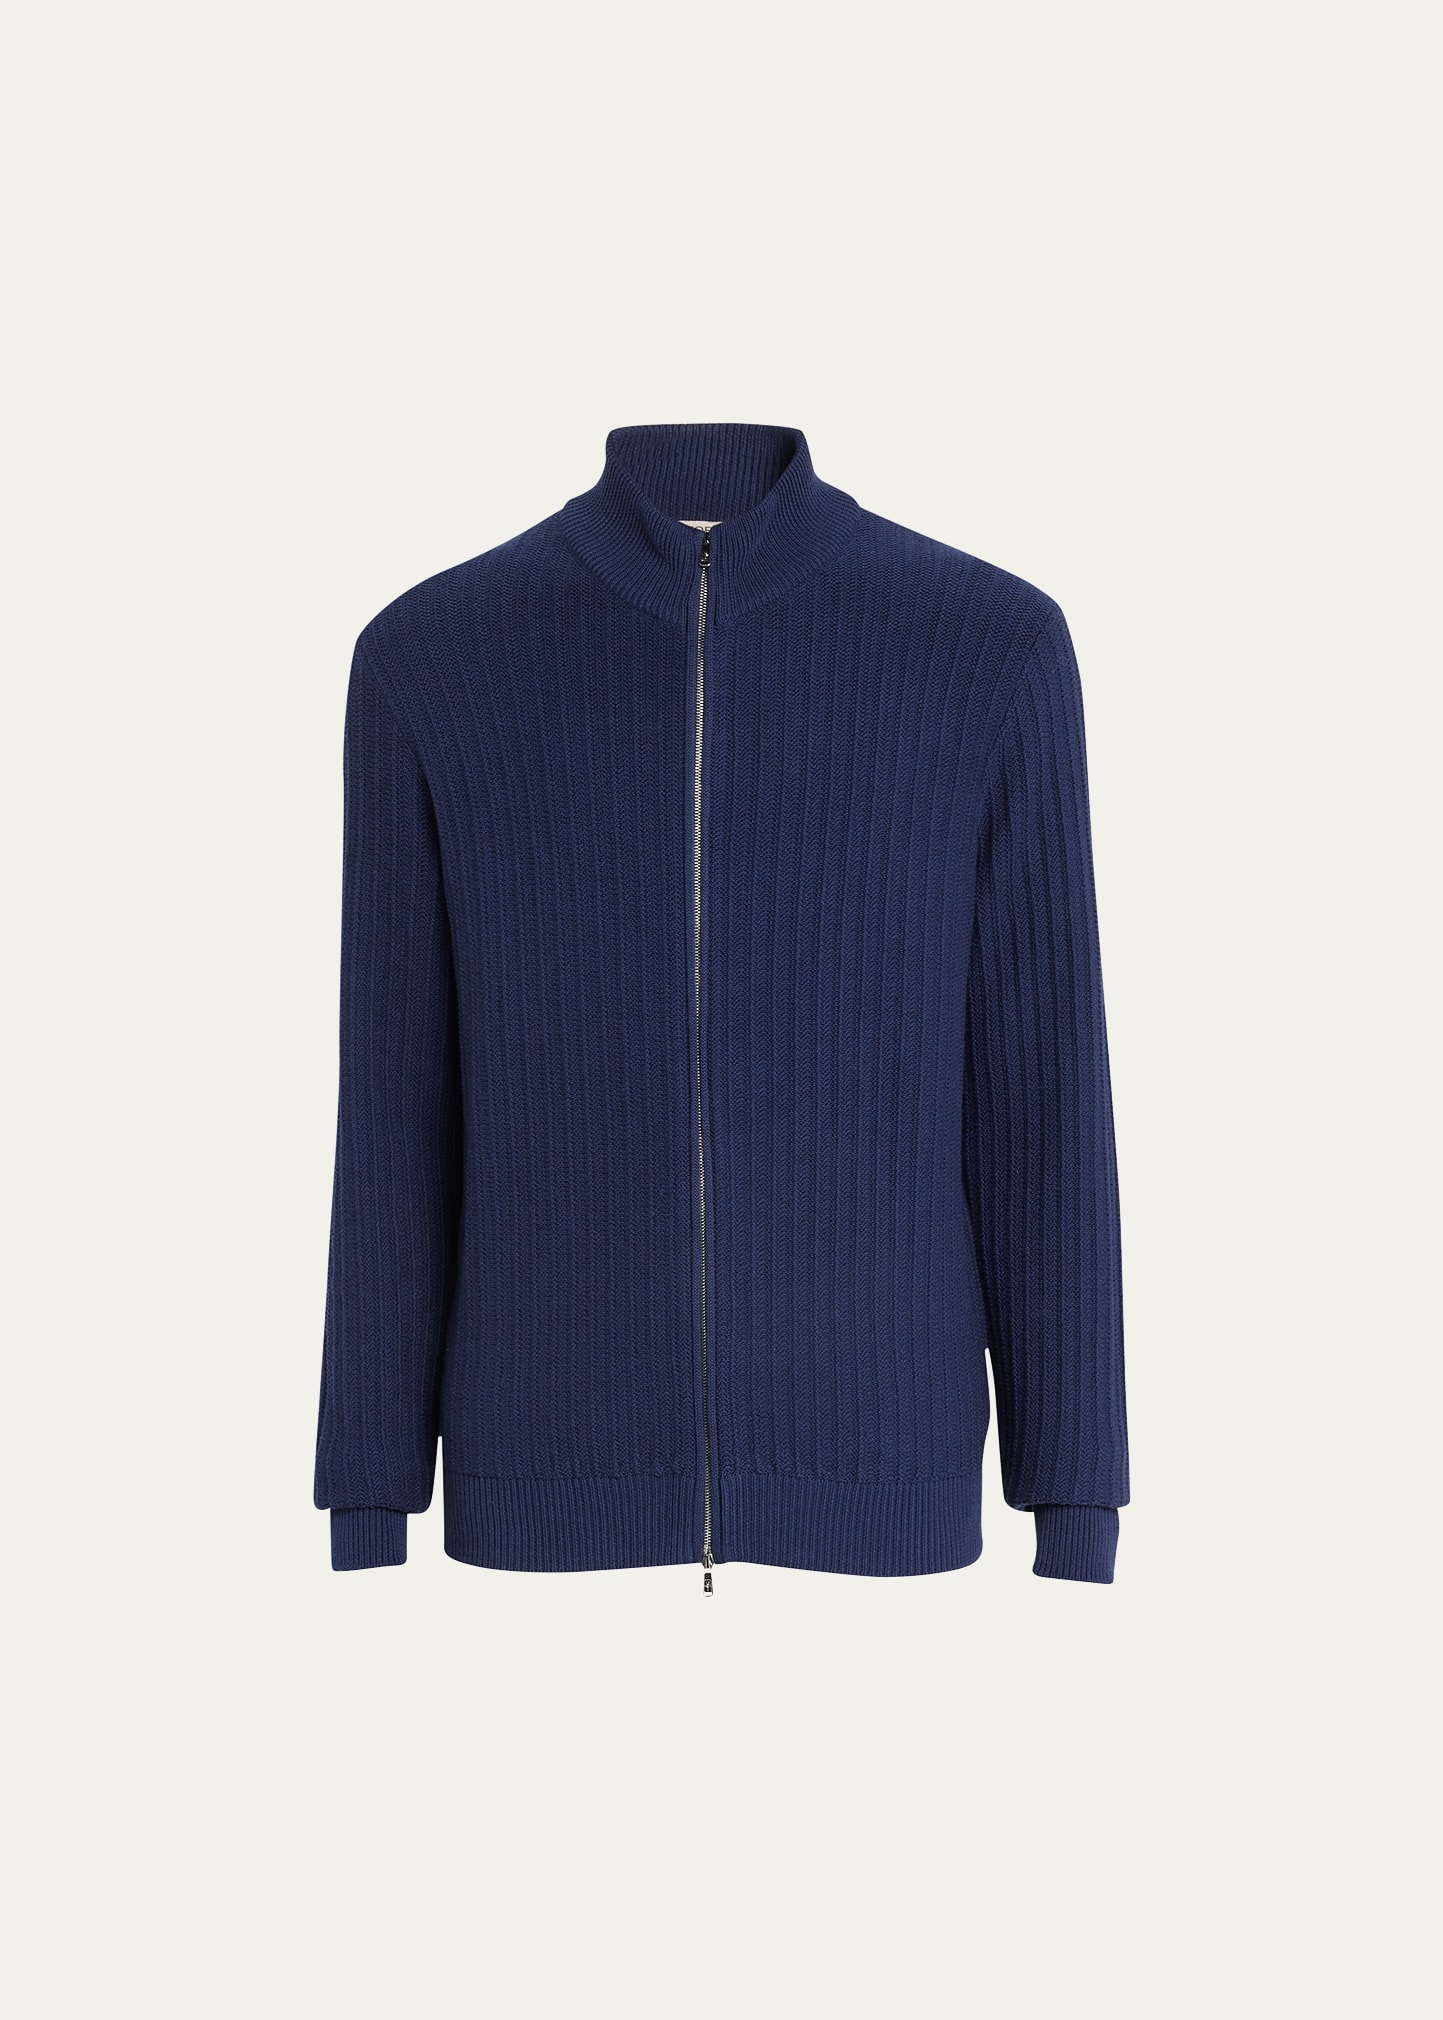 Fioroni Men's Cotton-Cashmere Full-Zip Knit Sweater